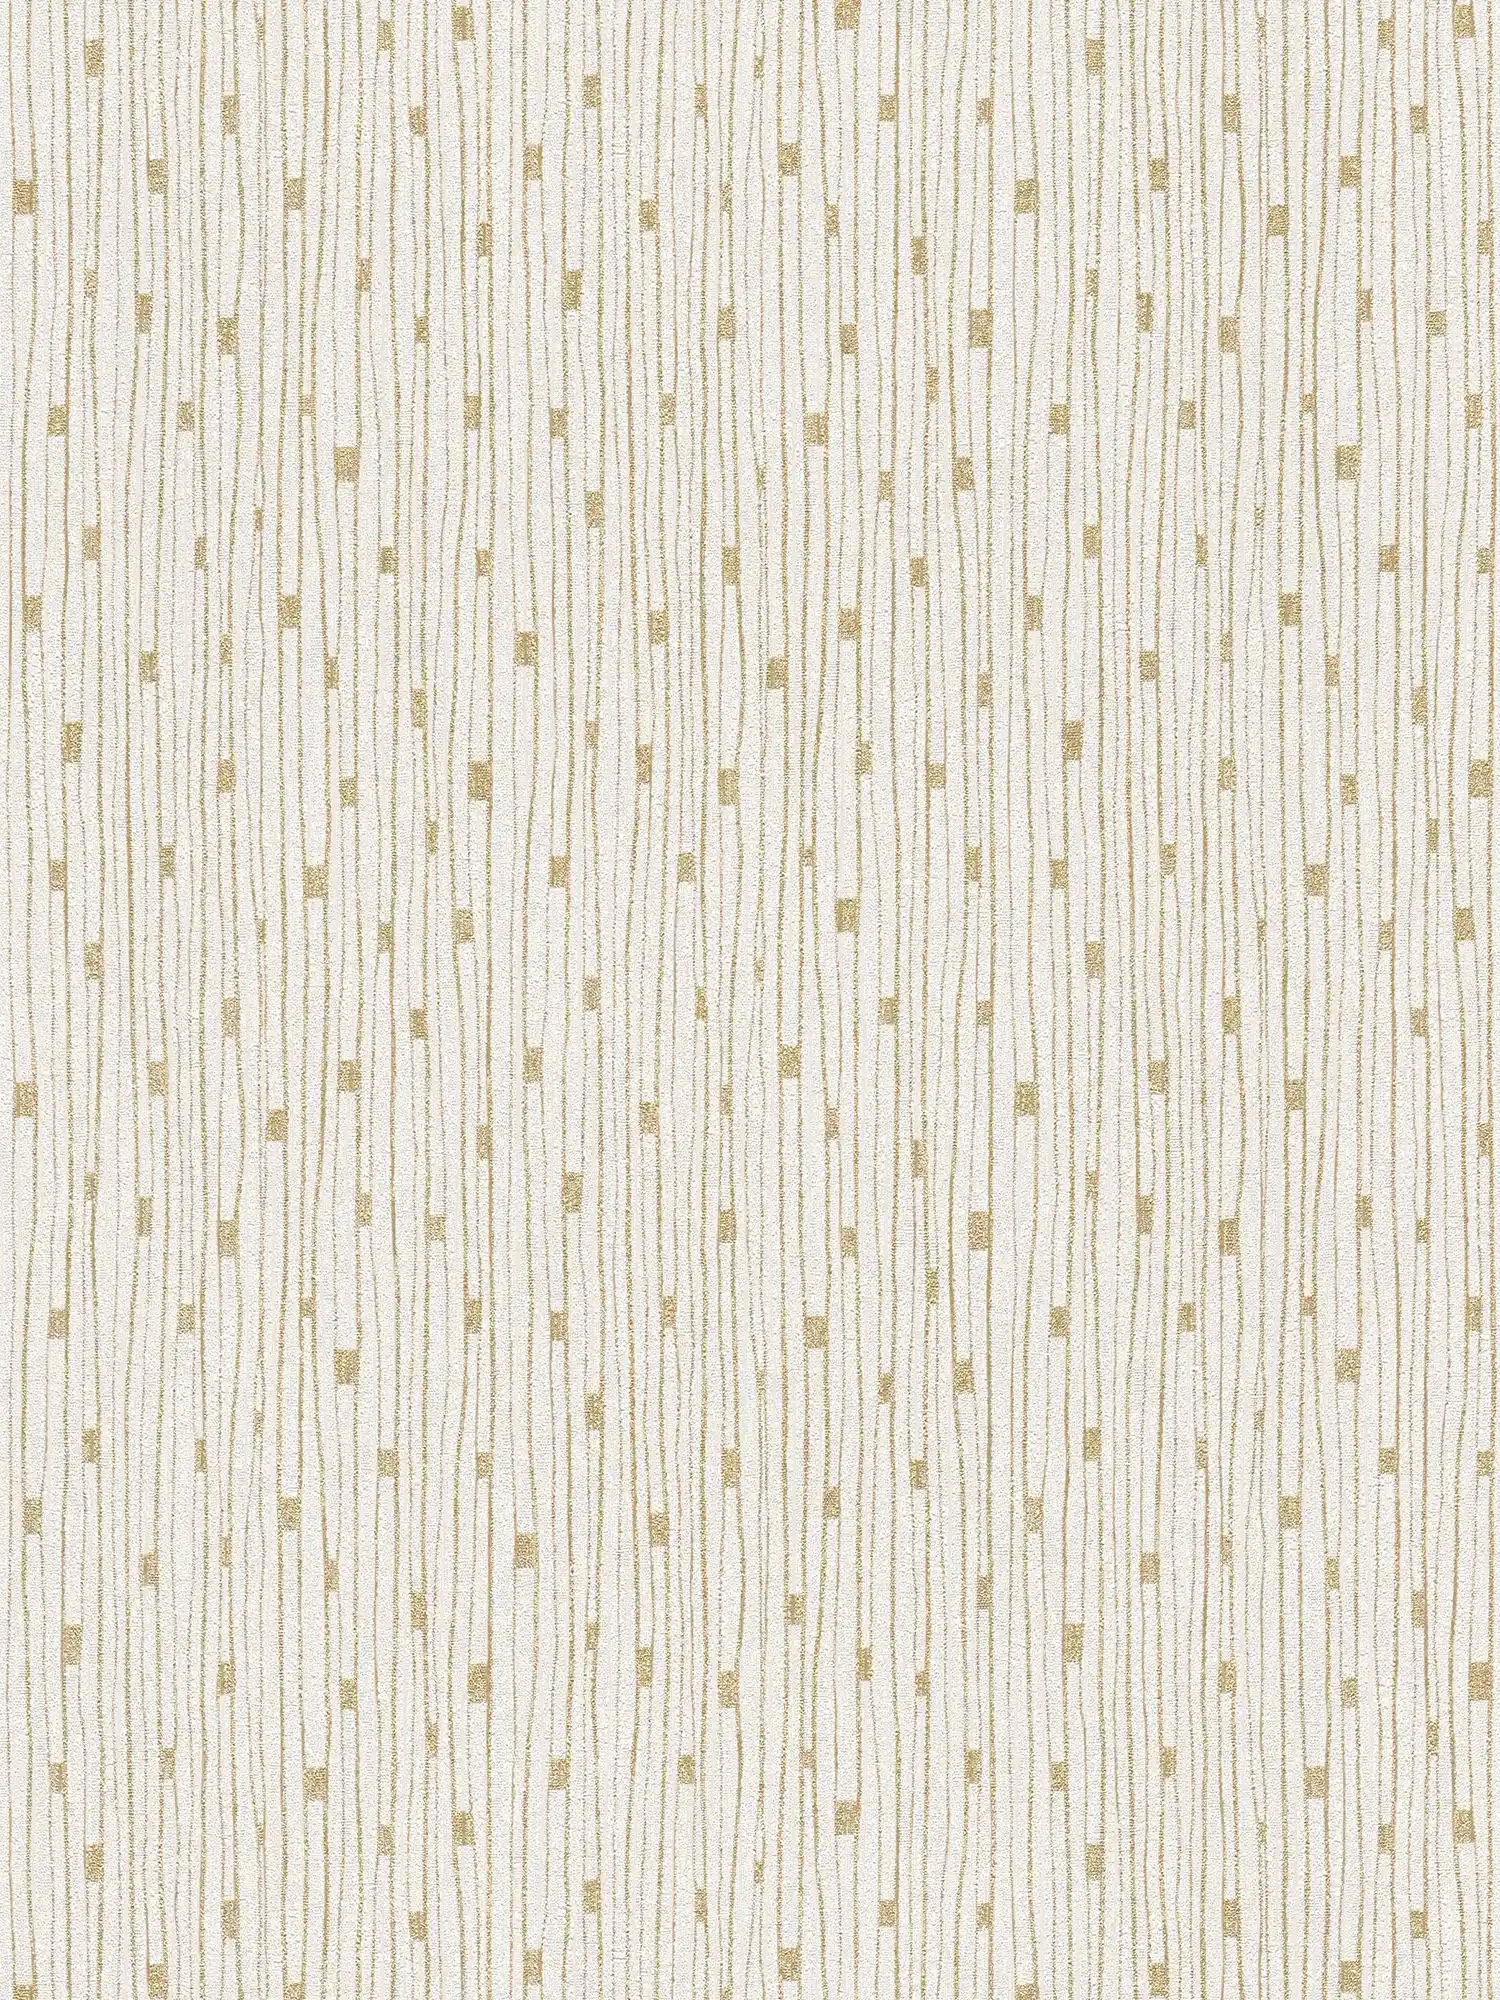 Retro wallpaper 50s line pattern - cream, metallic
